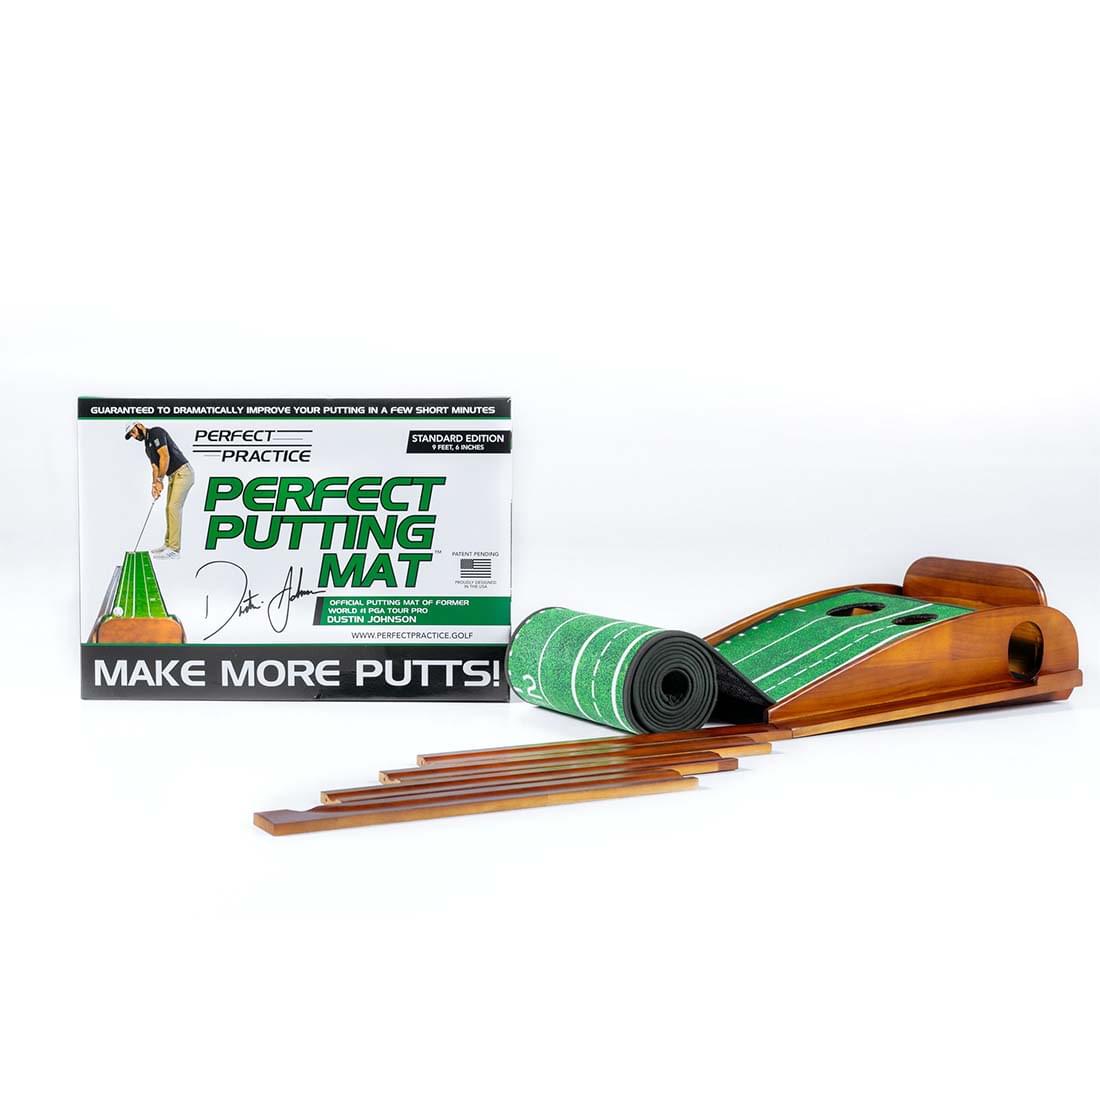 Putting Mats  Shop for Indoor Putting Mats & Putting Mats for Home - Golf  Training Aids